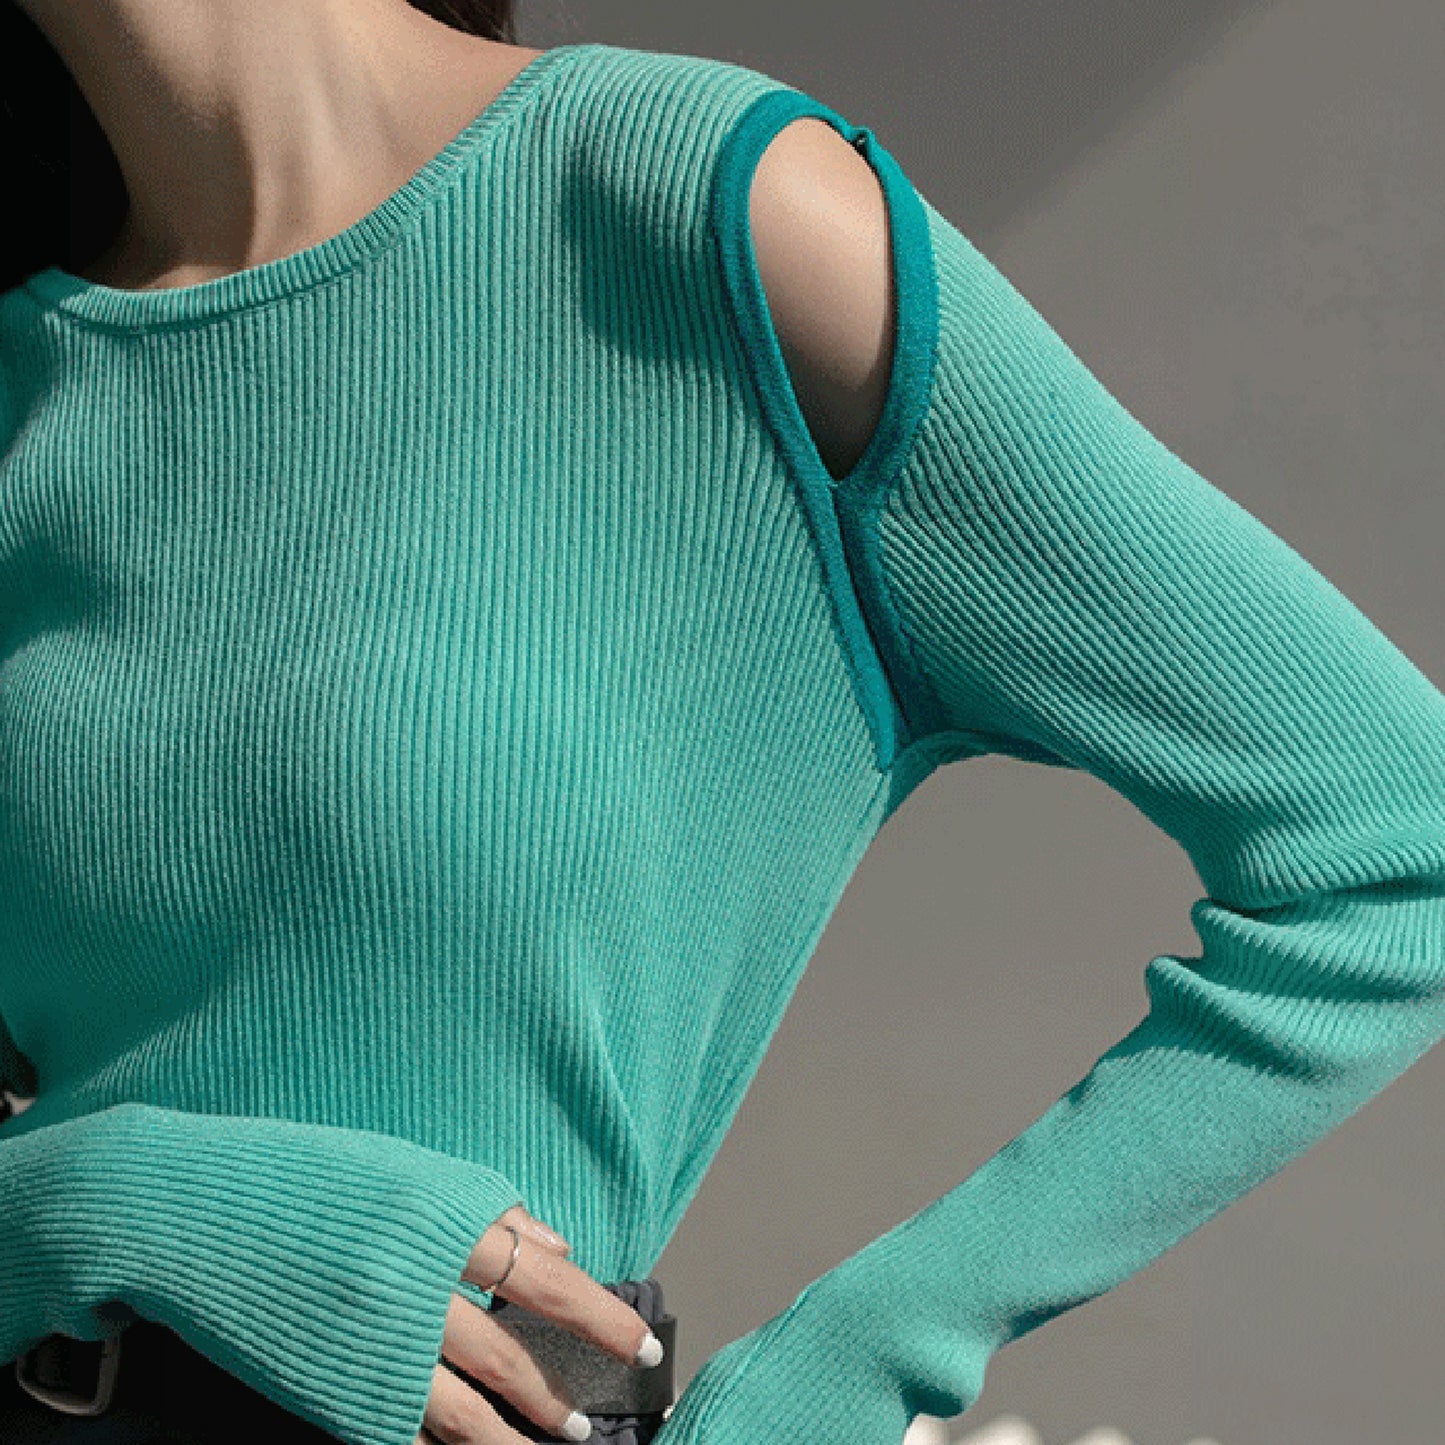 Off shoulder cutout sweater X271